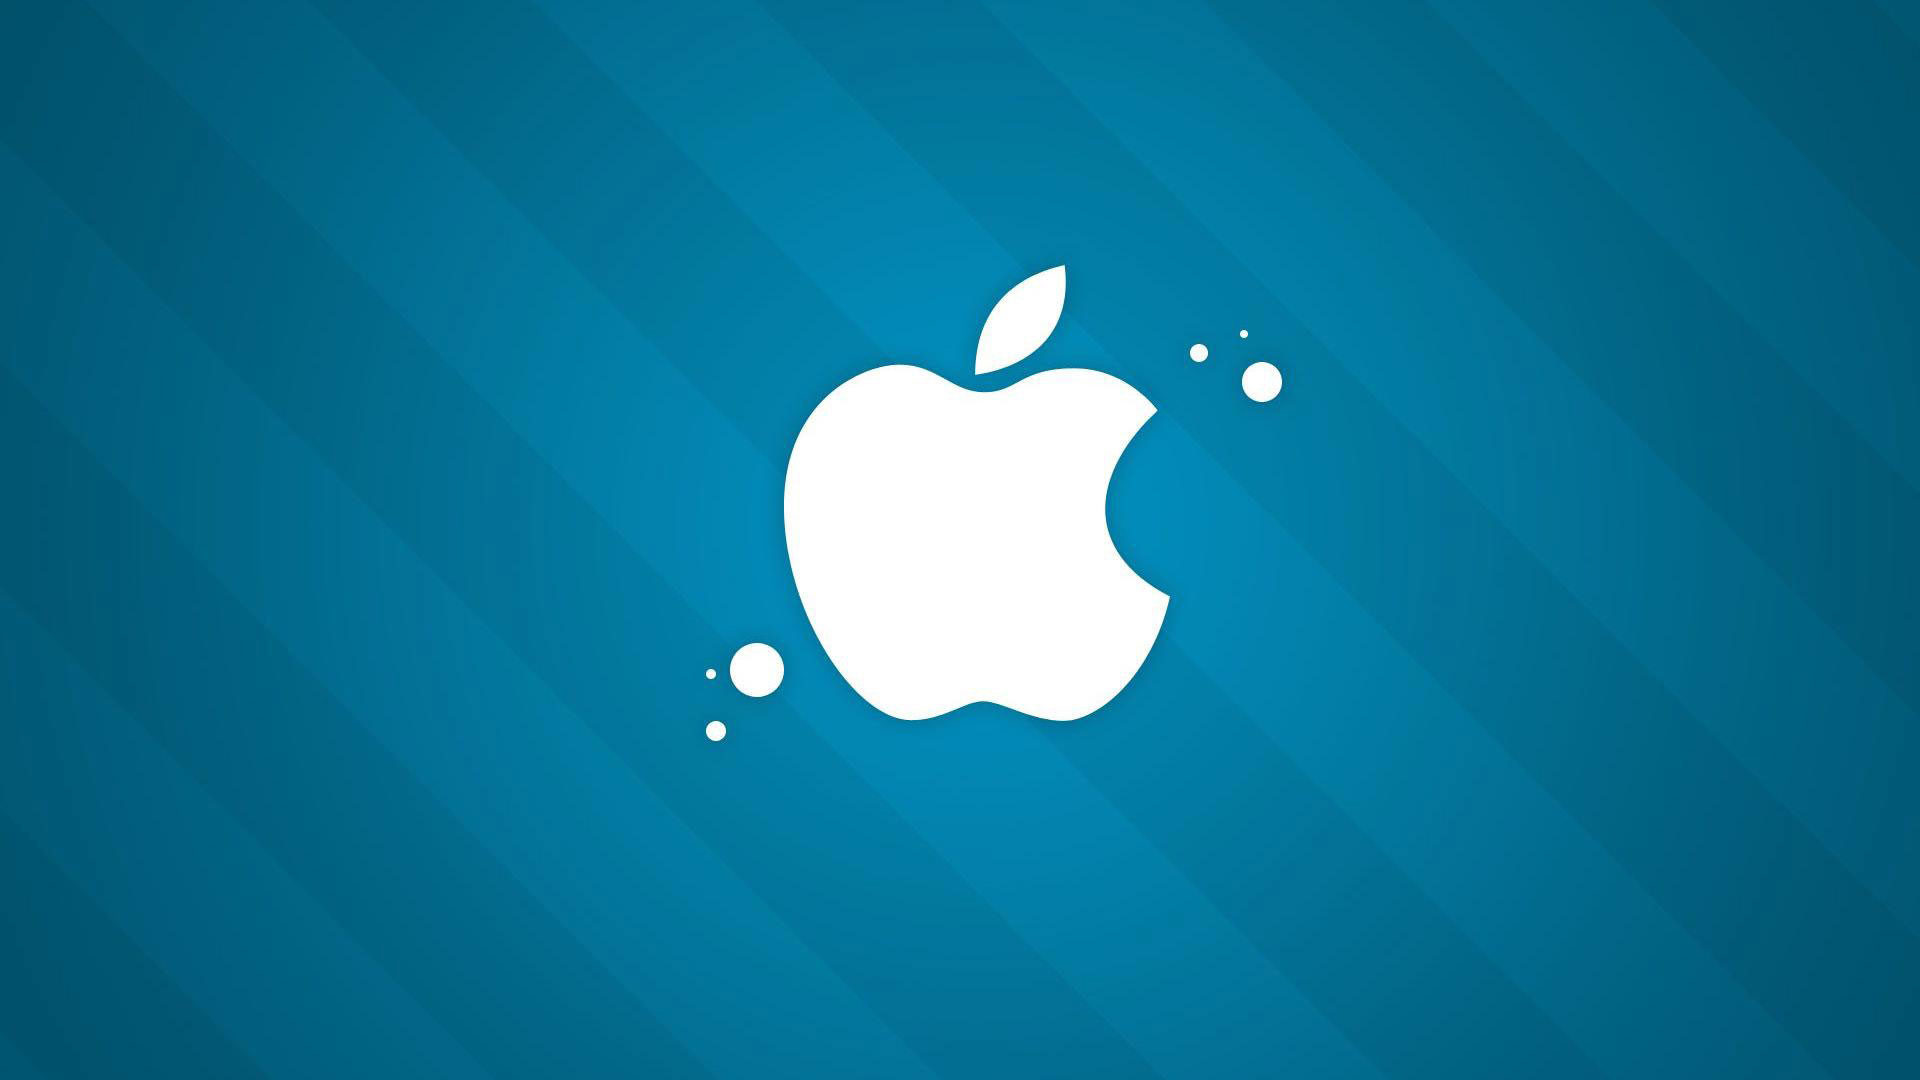 Hd Pics Photos Cool Blue White Apple Logo Hd Quality - Apple - HD Wallpaper 